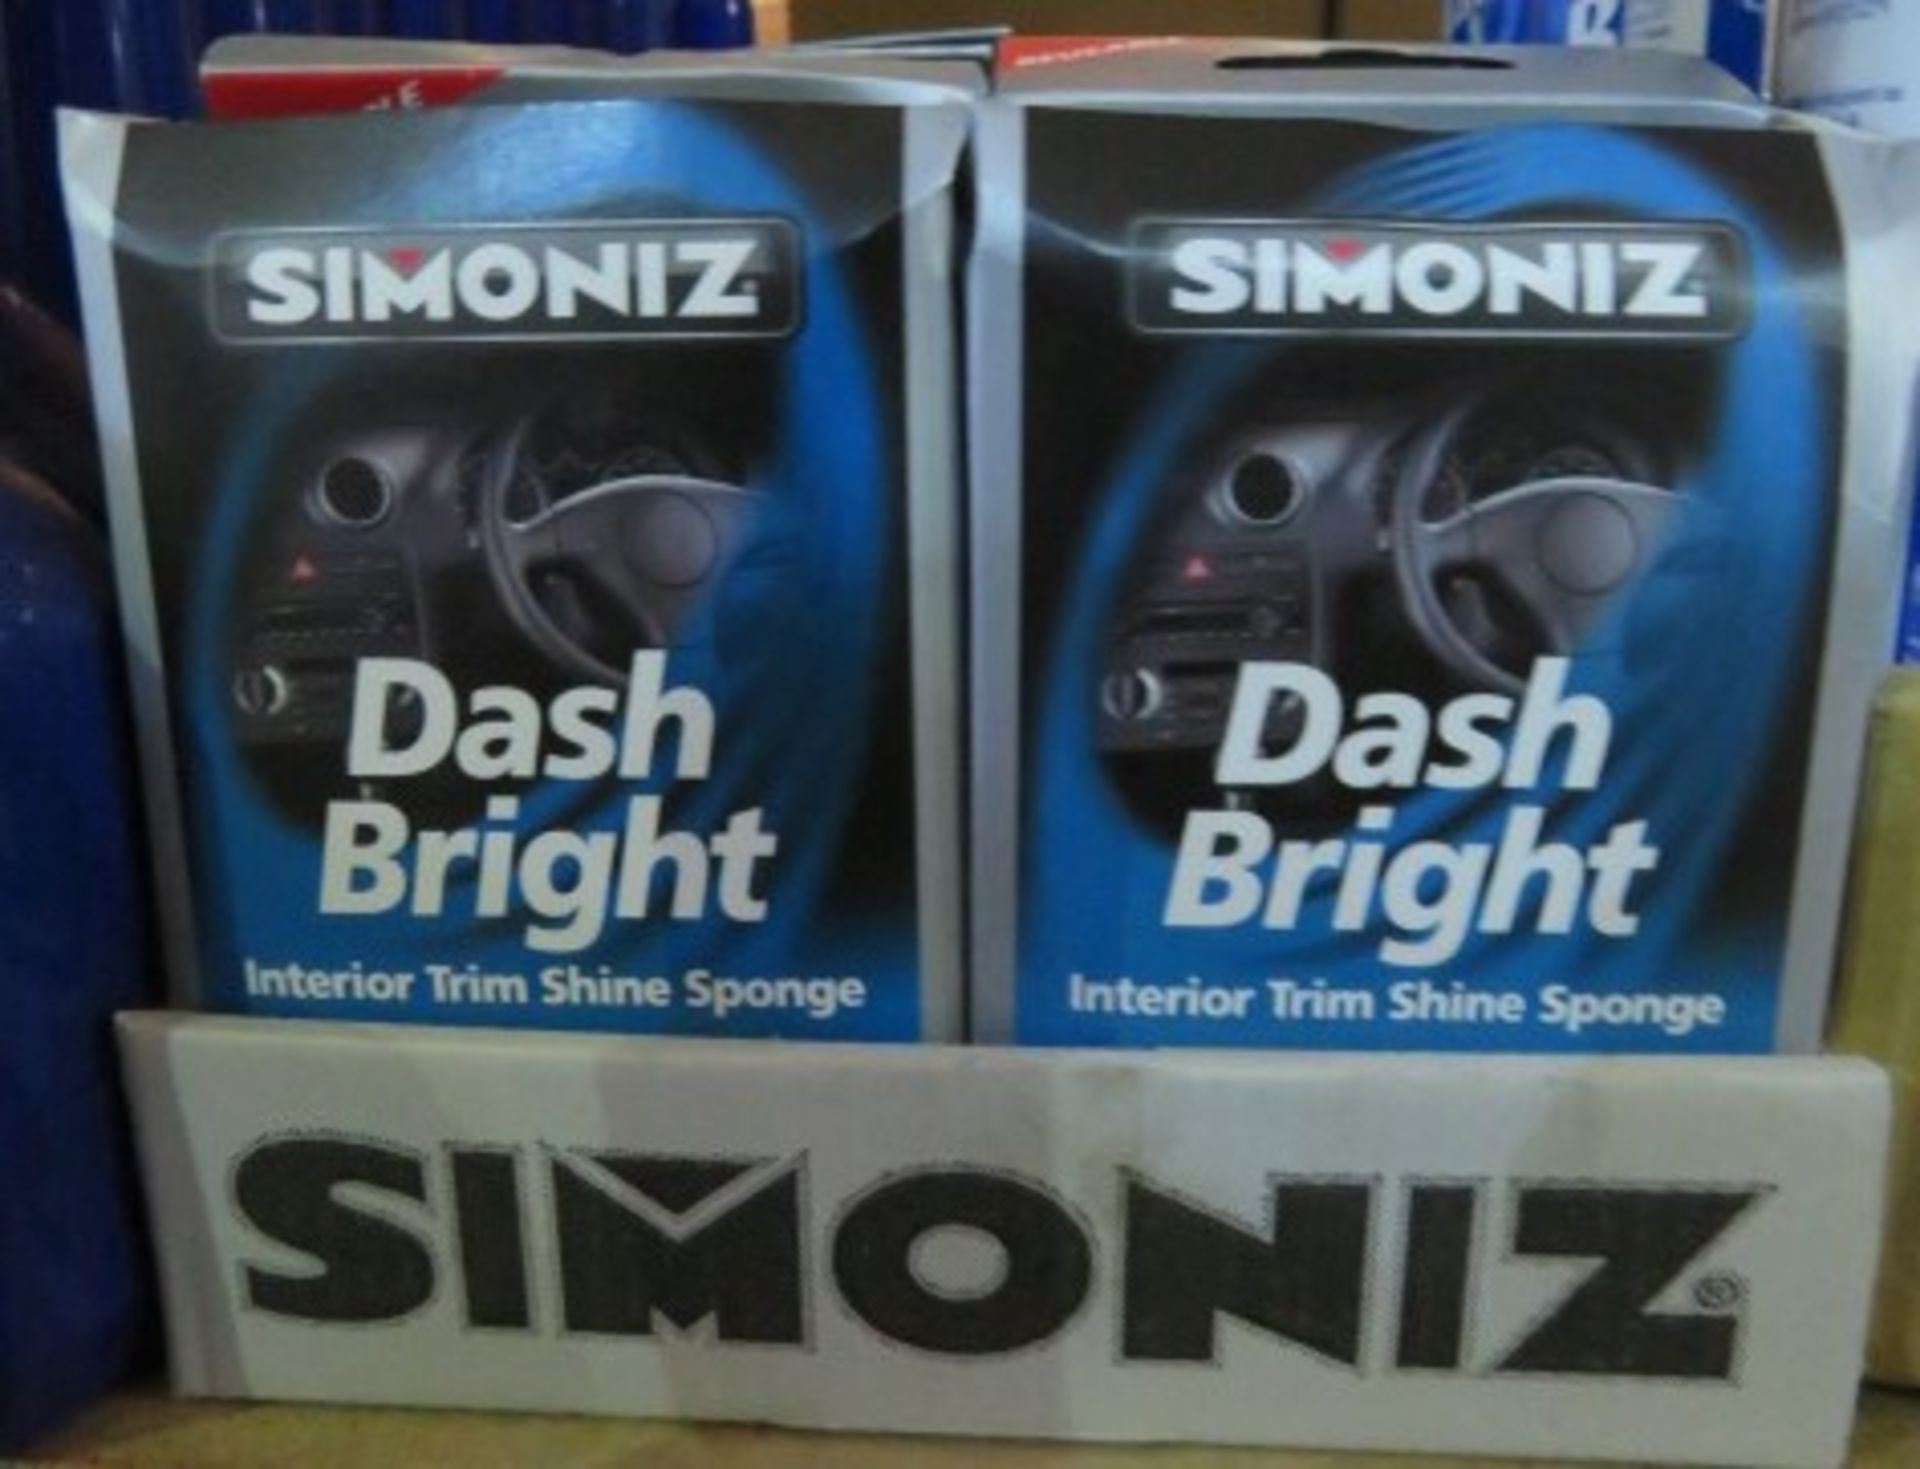 16x Simoniz Dash Bright Sponge. UK DELIVERY AVAILABLE FROM £14 PLUS VAT - HUGE PROFIT POTENTIA...